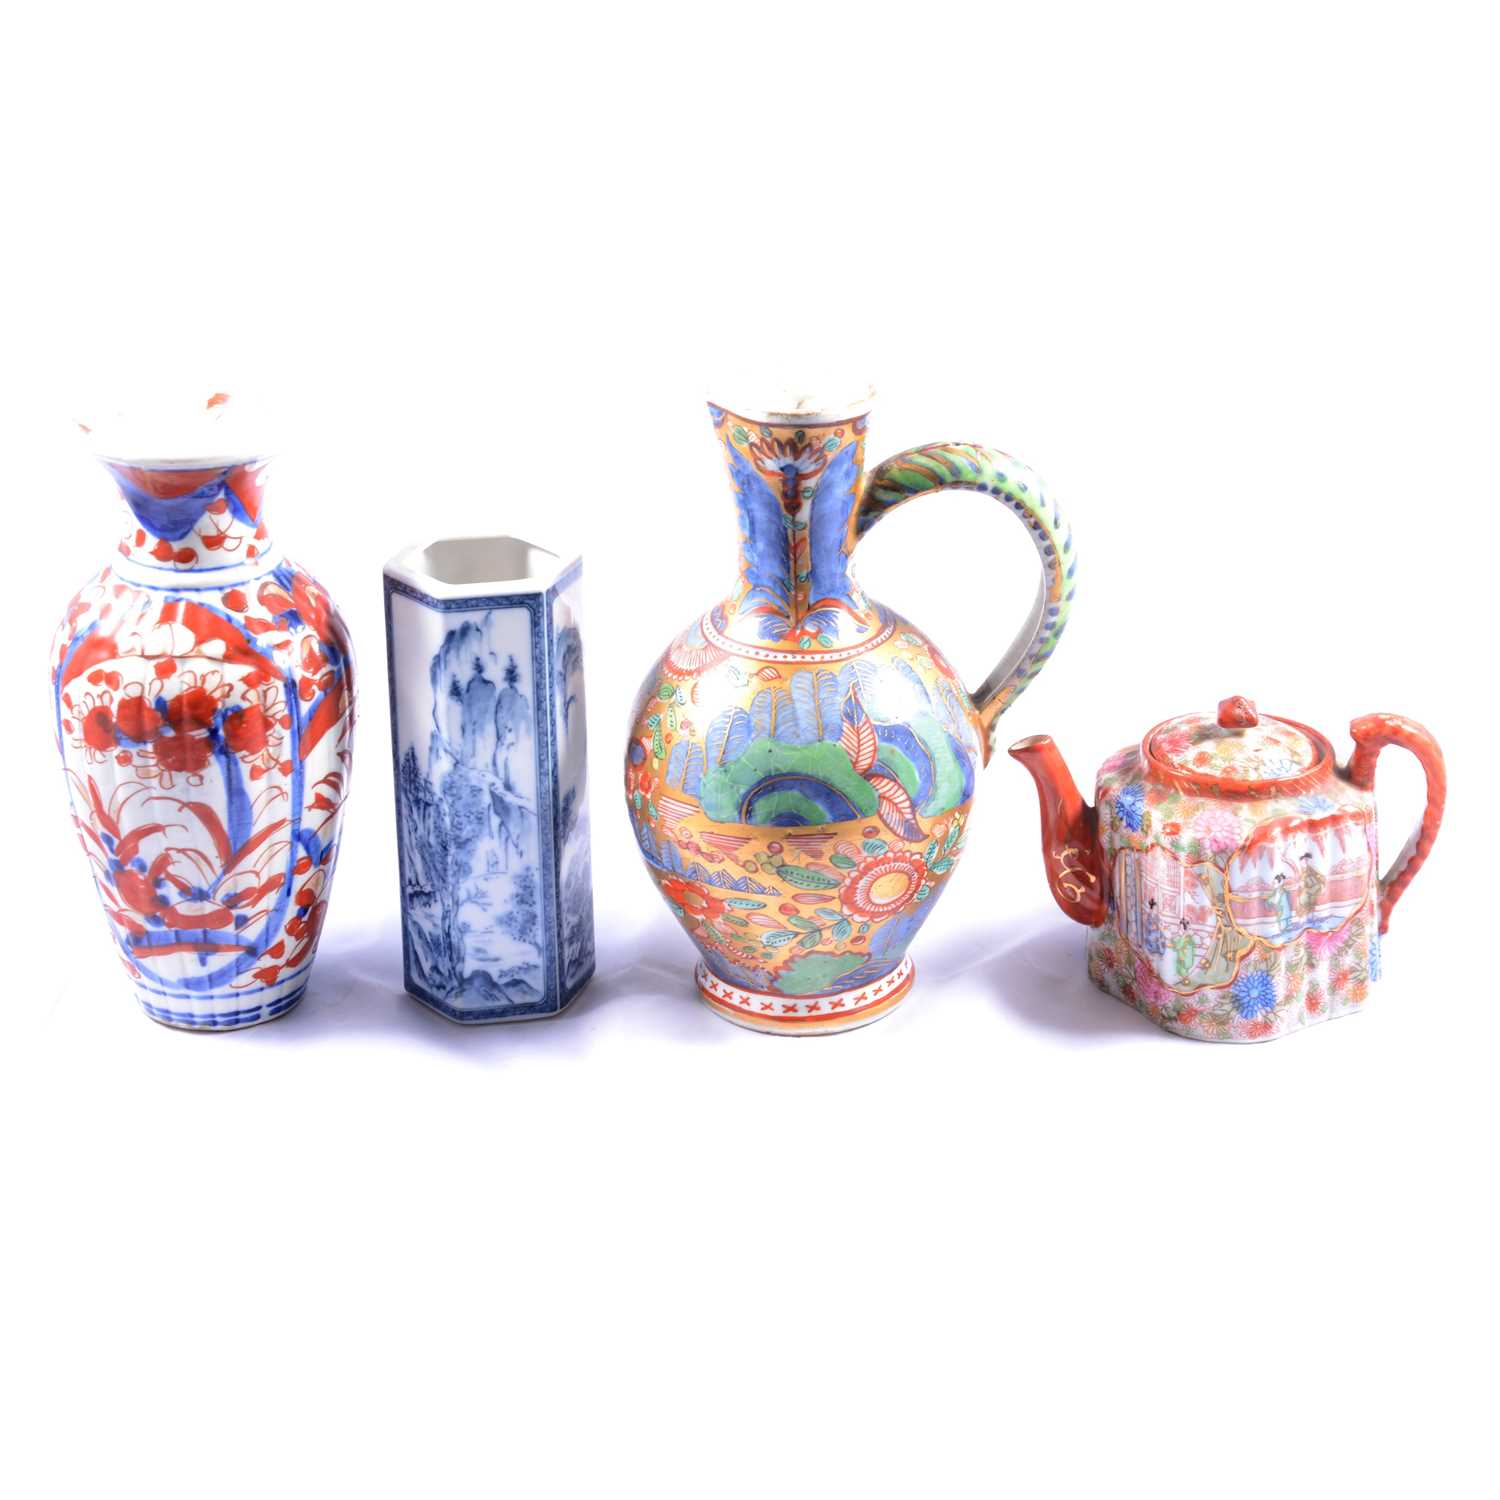 Box of assorted decorative ceramics